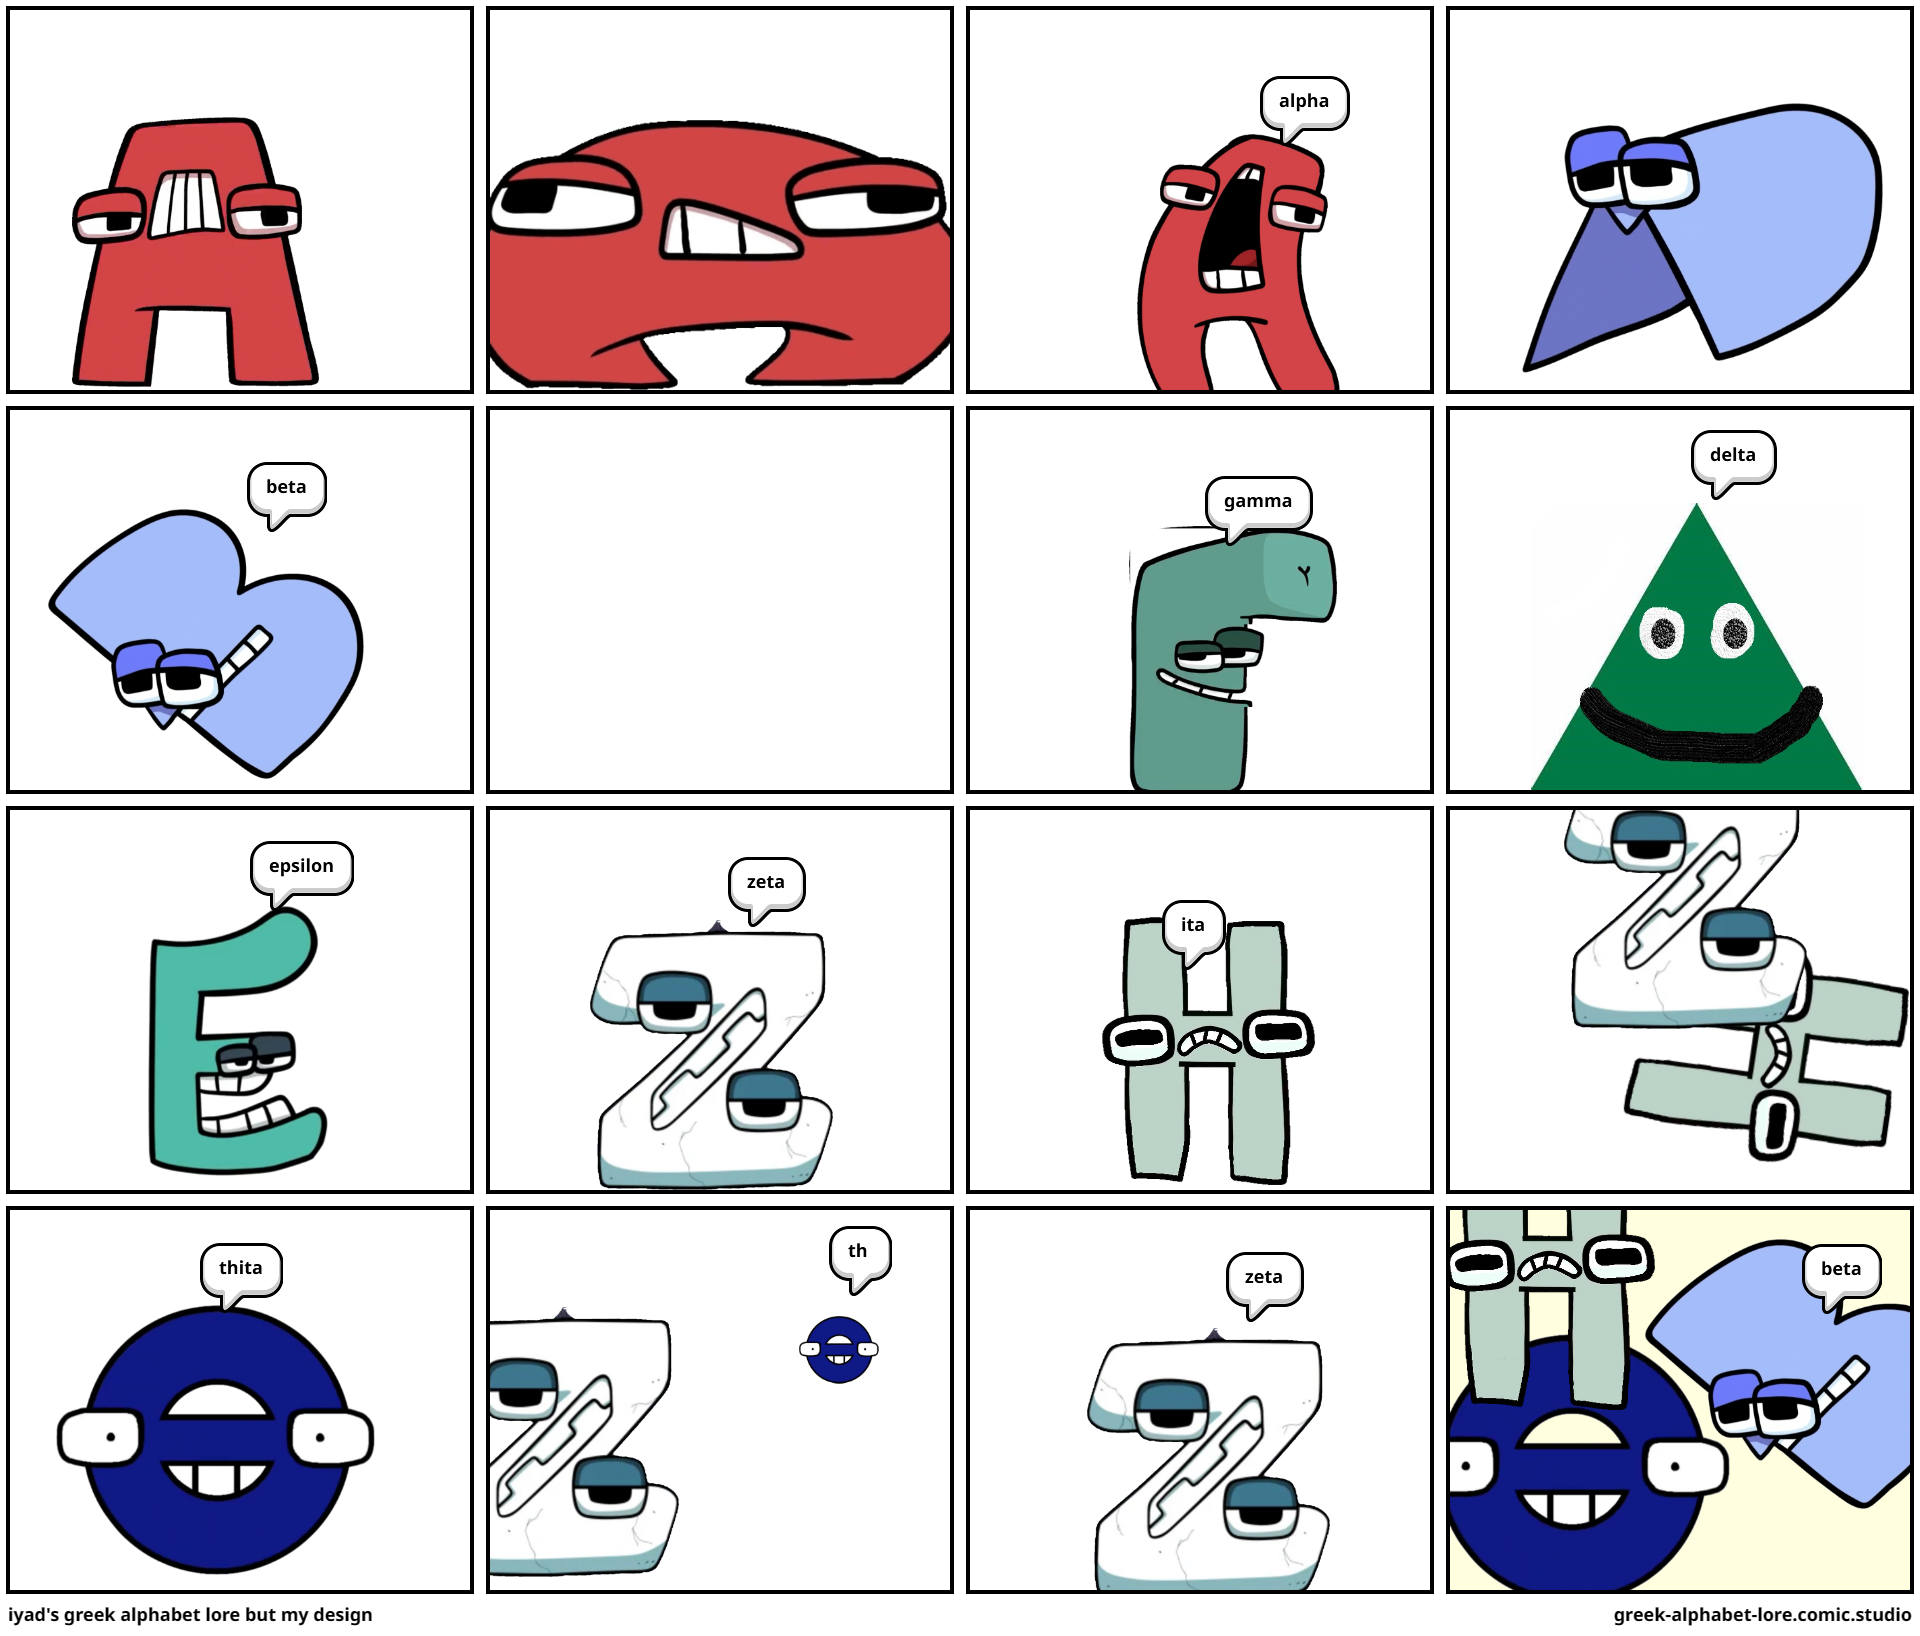 iyad's greek alphabet lore but my design